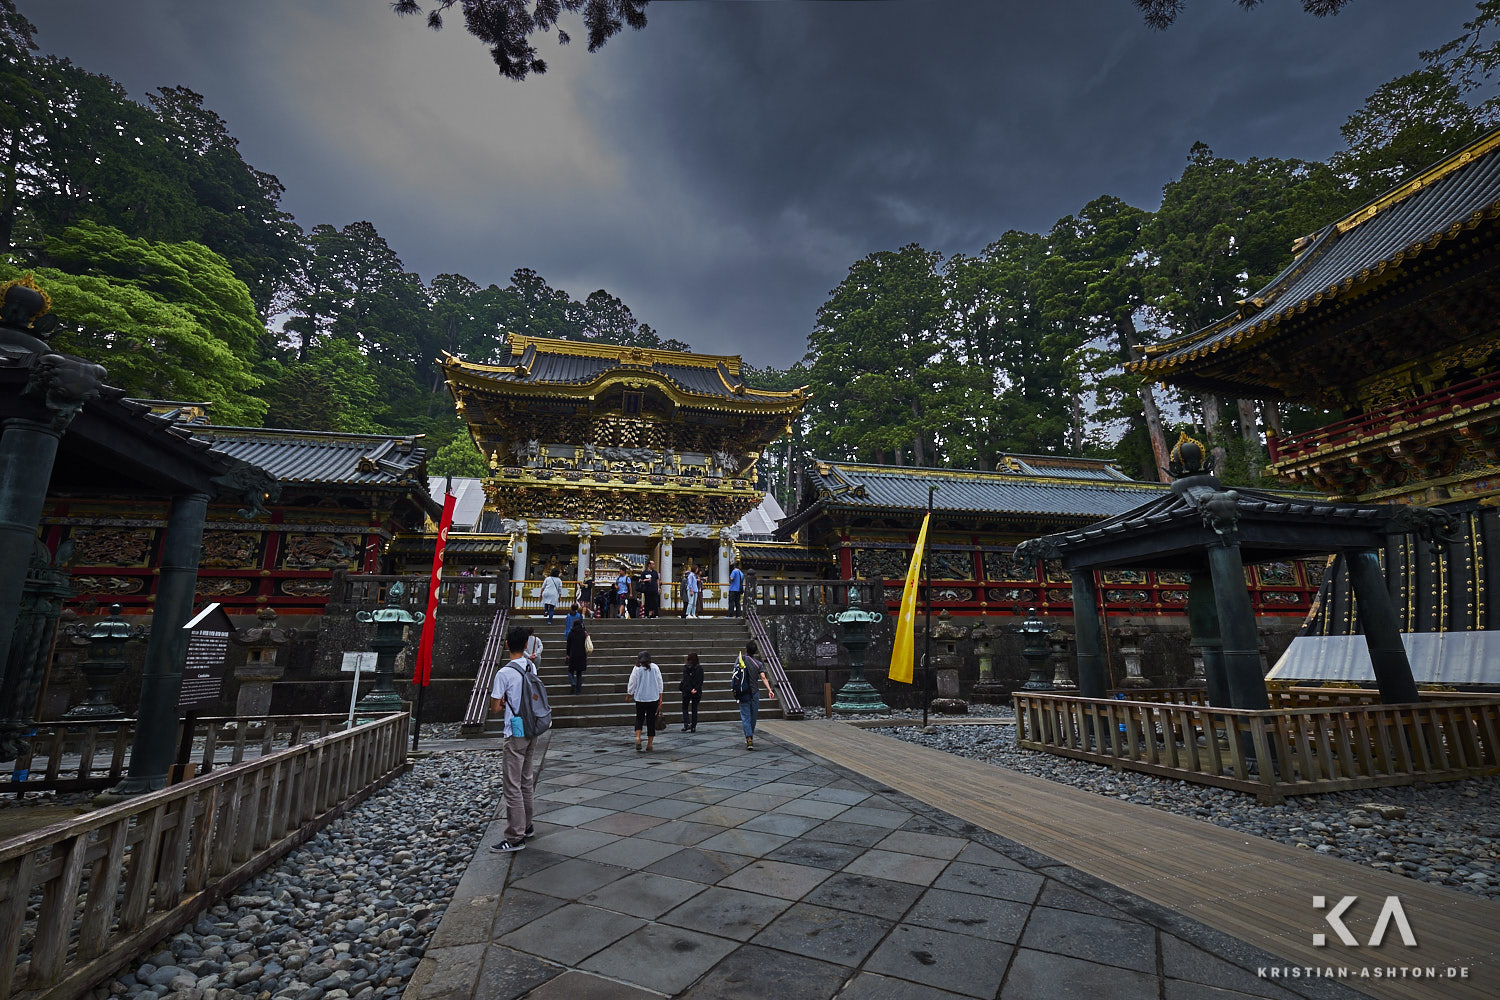 In the Toshogu shrine site